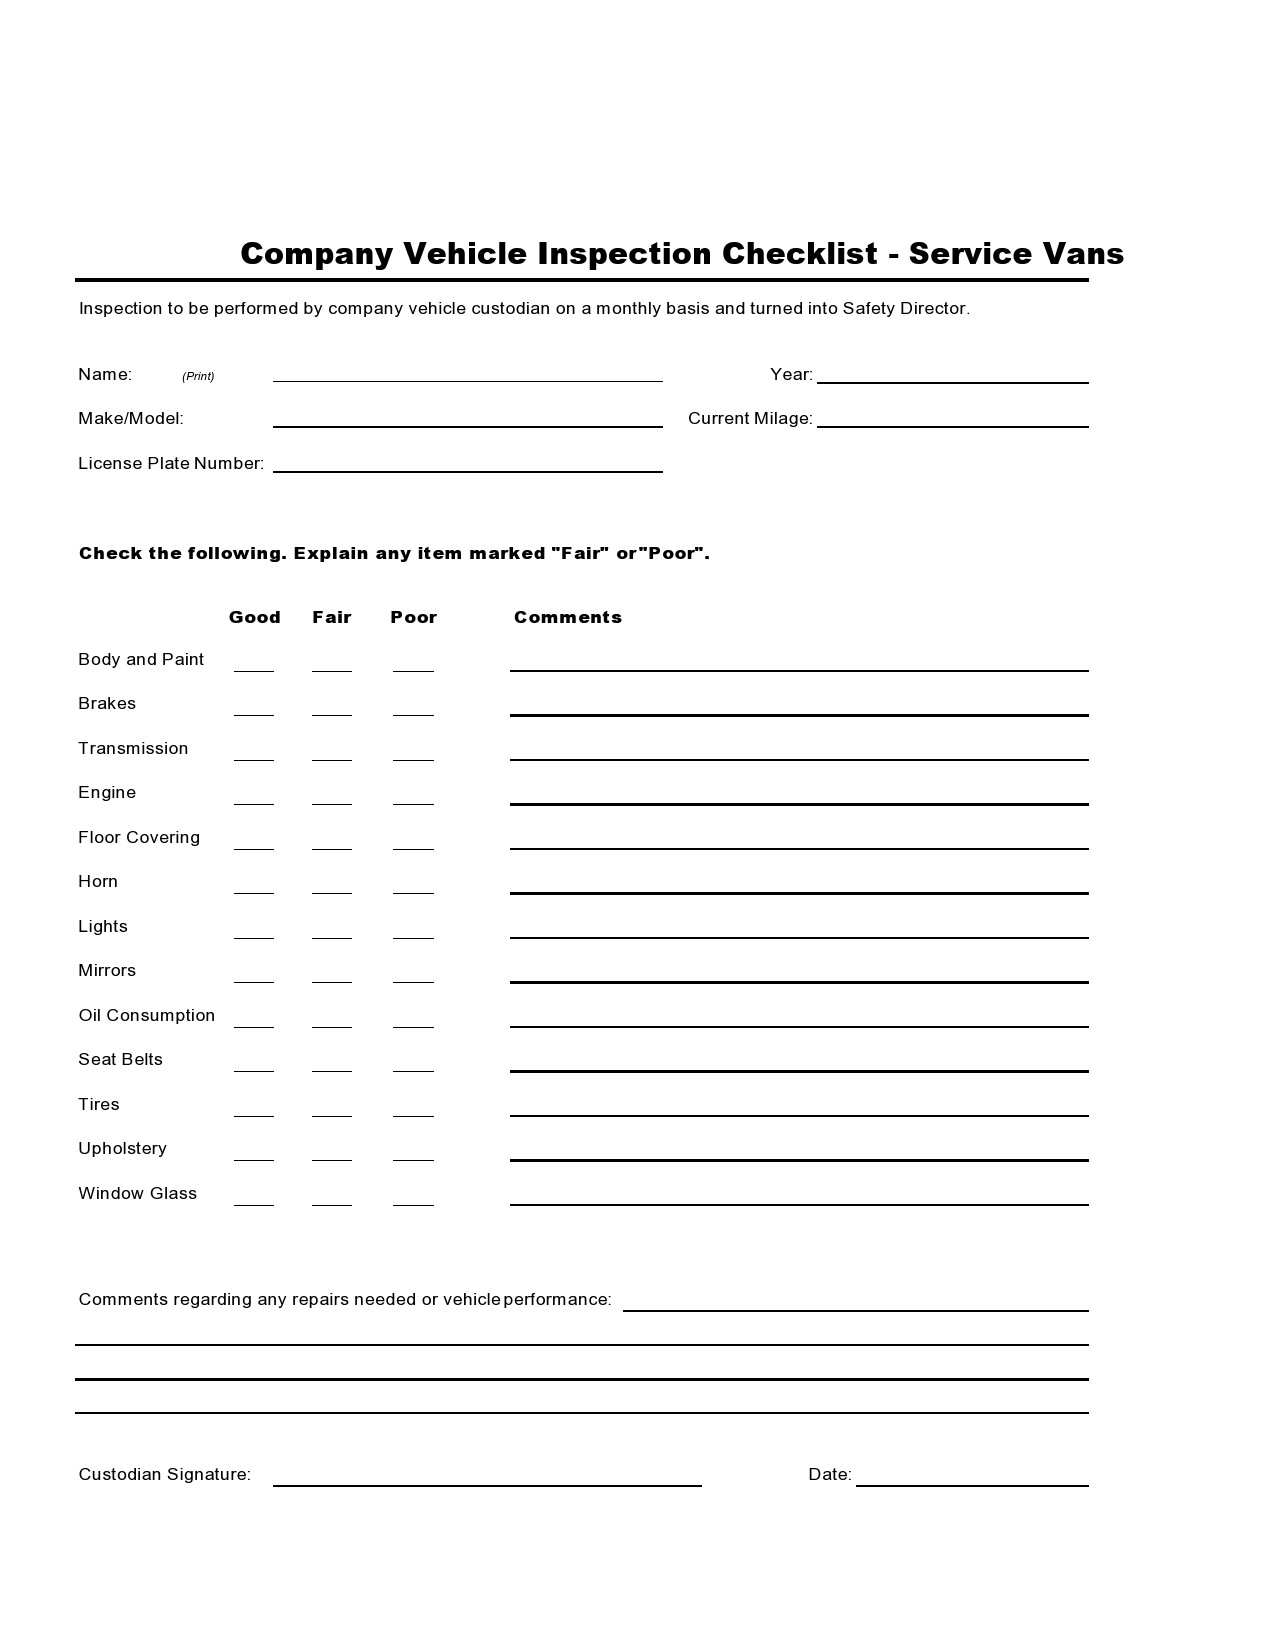 Best Vehicle Checklists Inspection Maintenance Templatelab